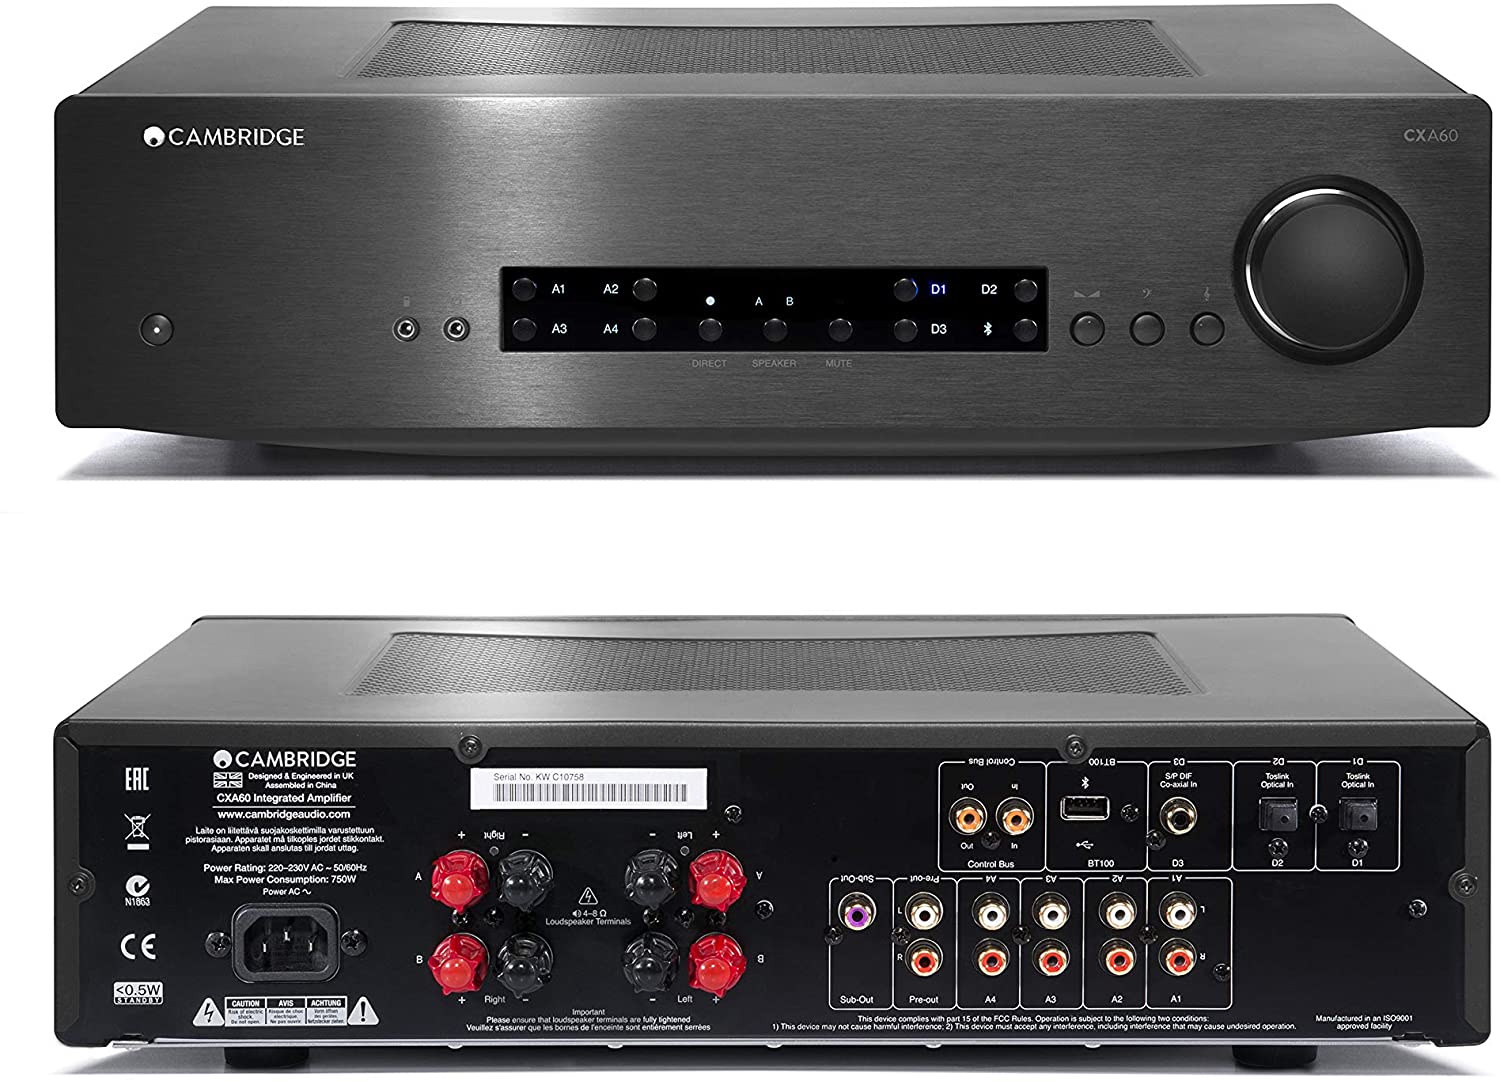 Cambridge Audio Axr100 Vs Cxa60